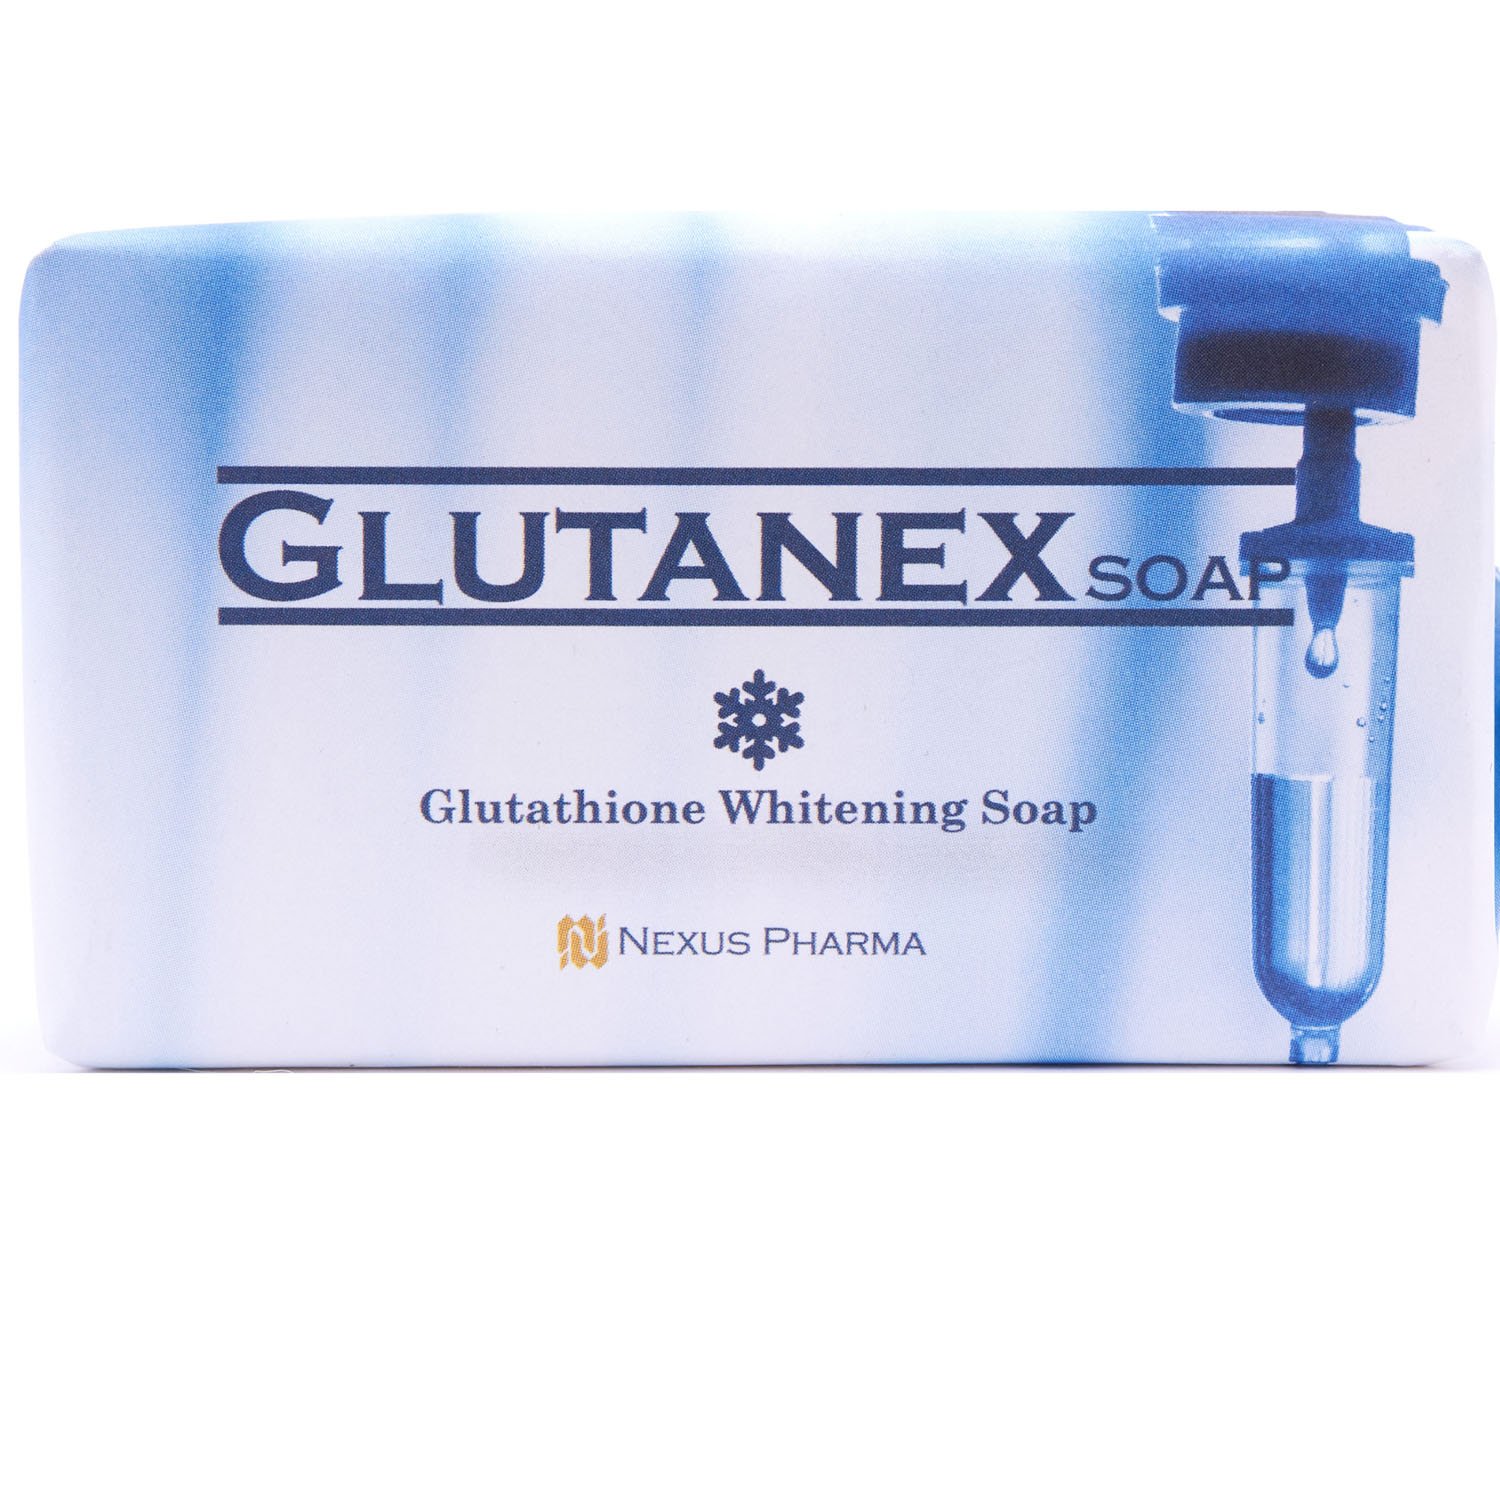 Glutanex Soap